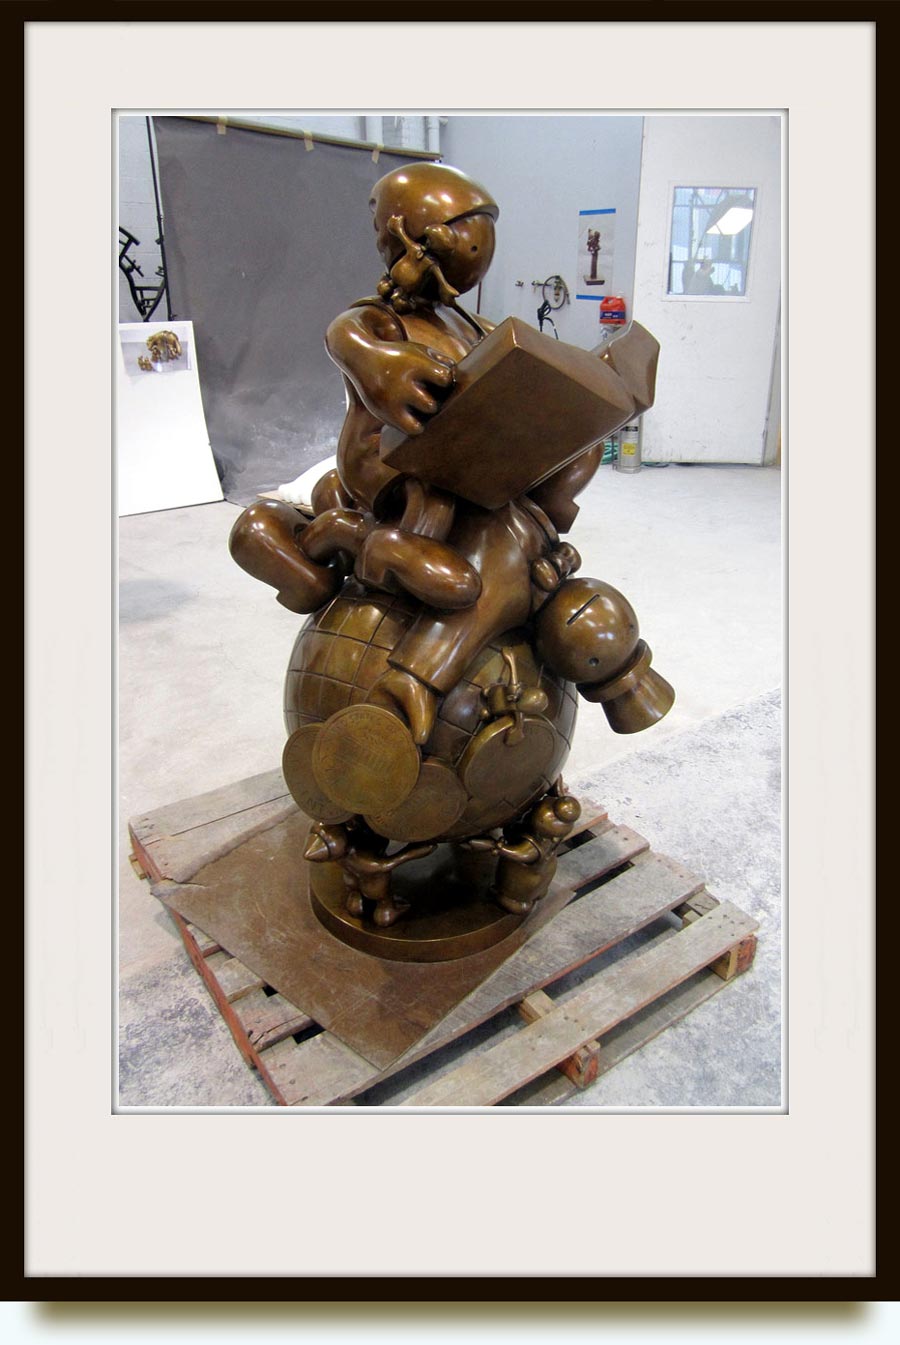 Tom Otterness (b. 1952 in Wichita, Kansas, US). The Lesson. 2010. Bronze. Tom Otterness Studio, Open House New York (OHNY).